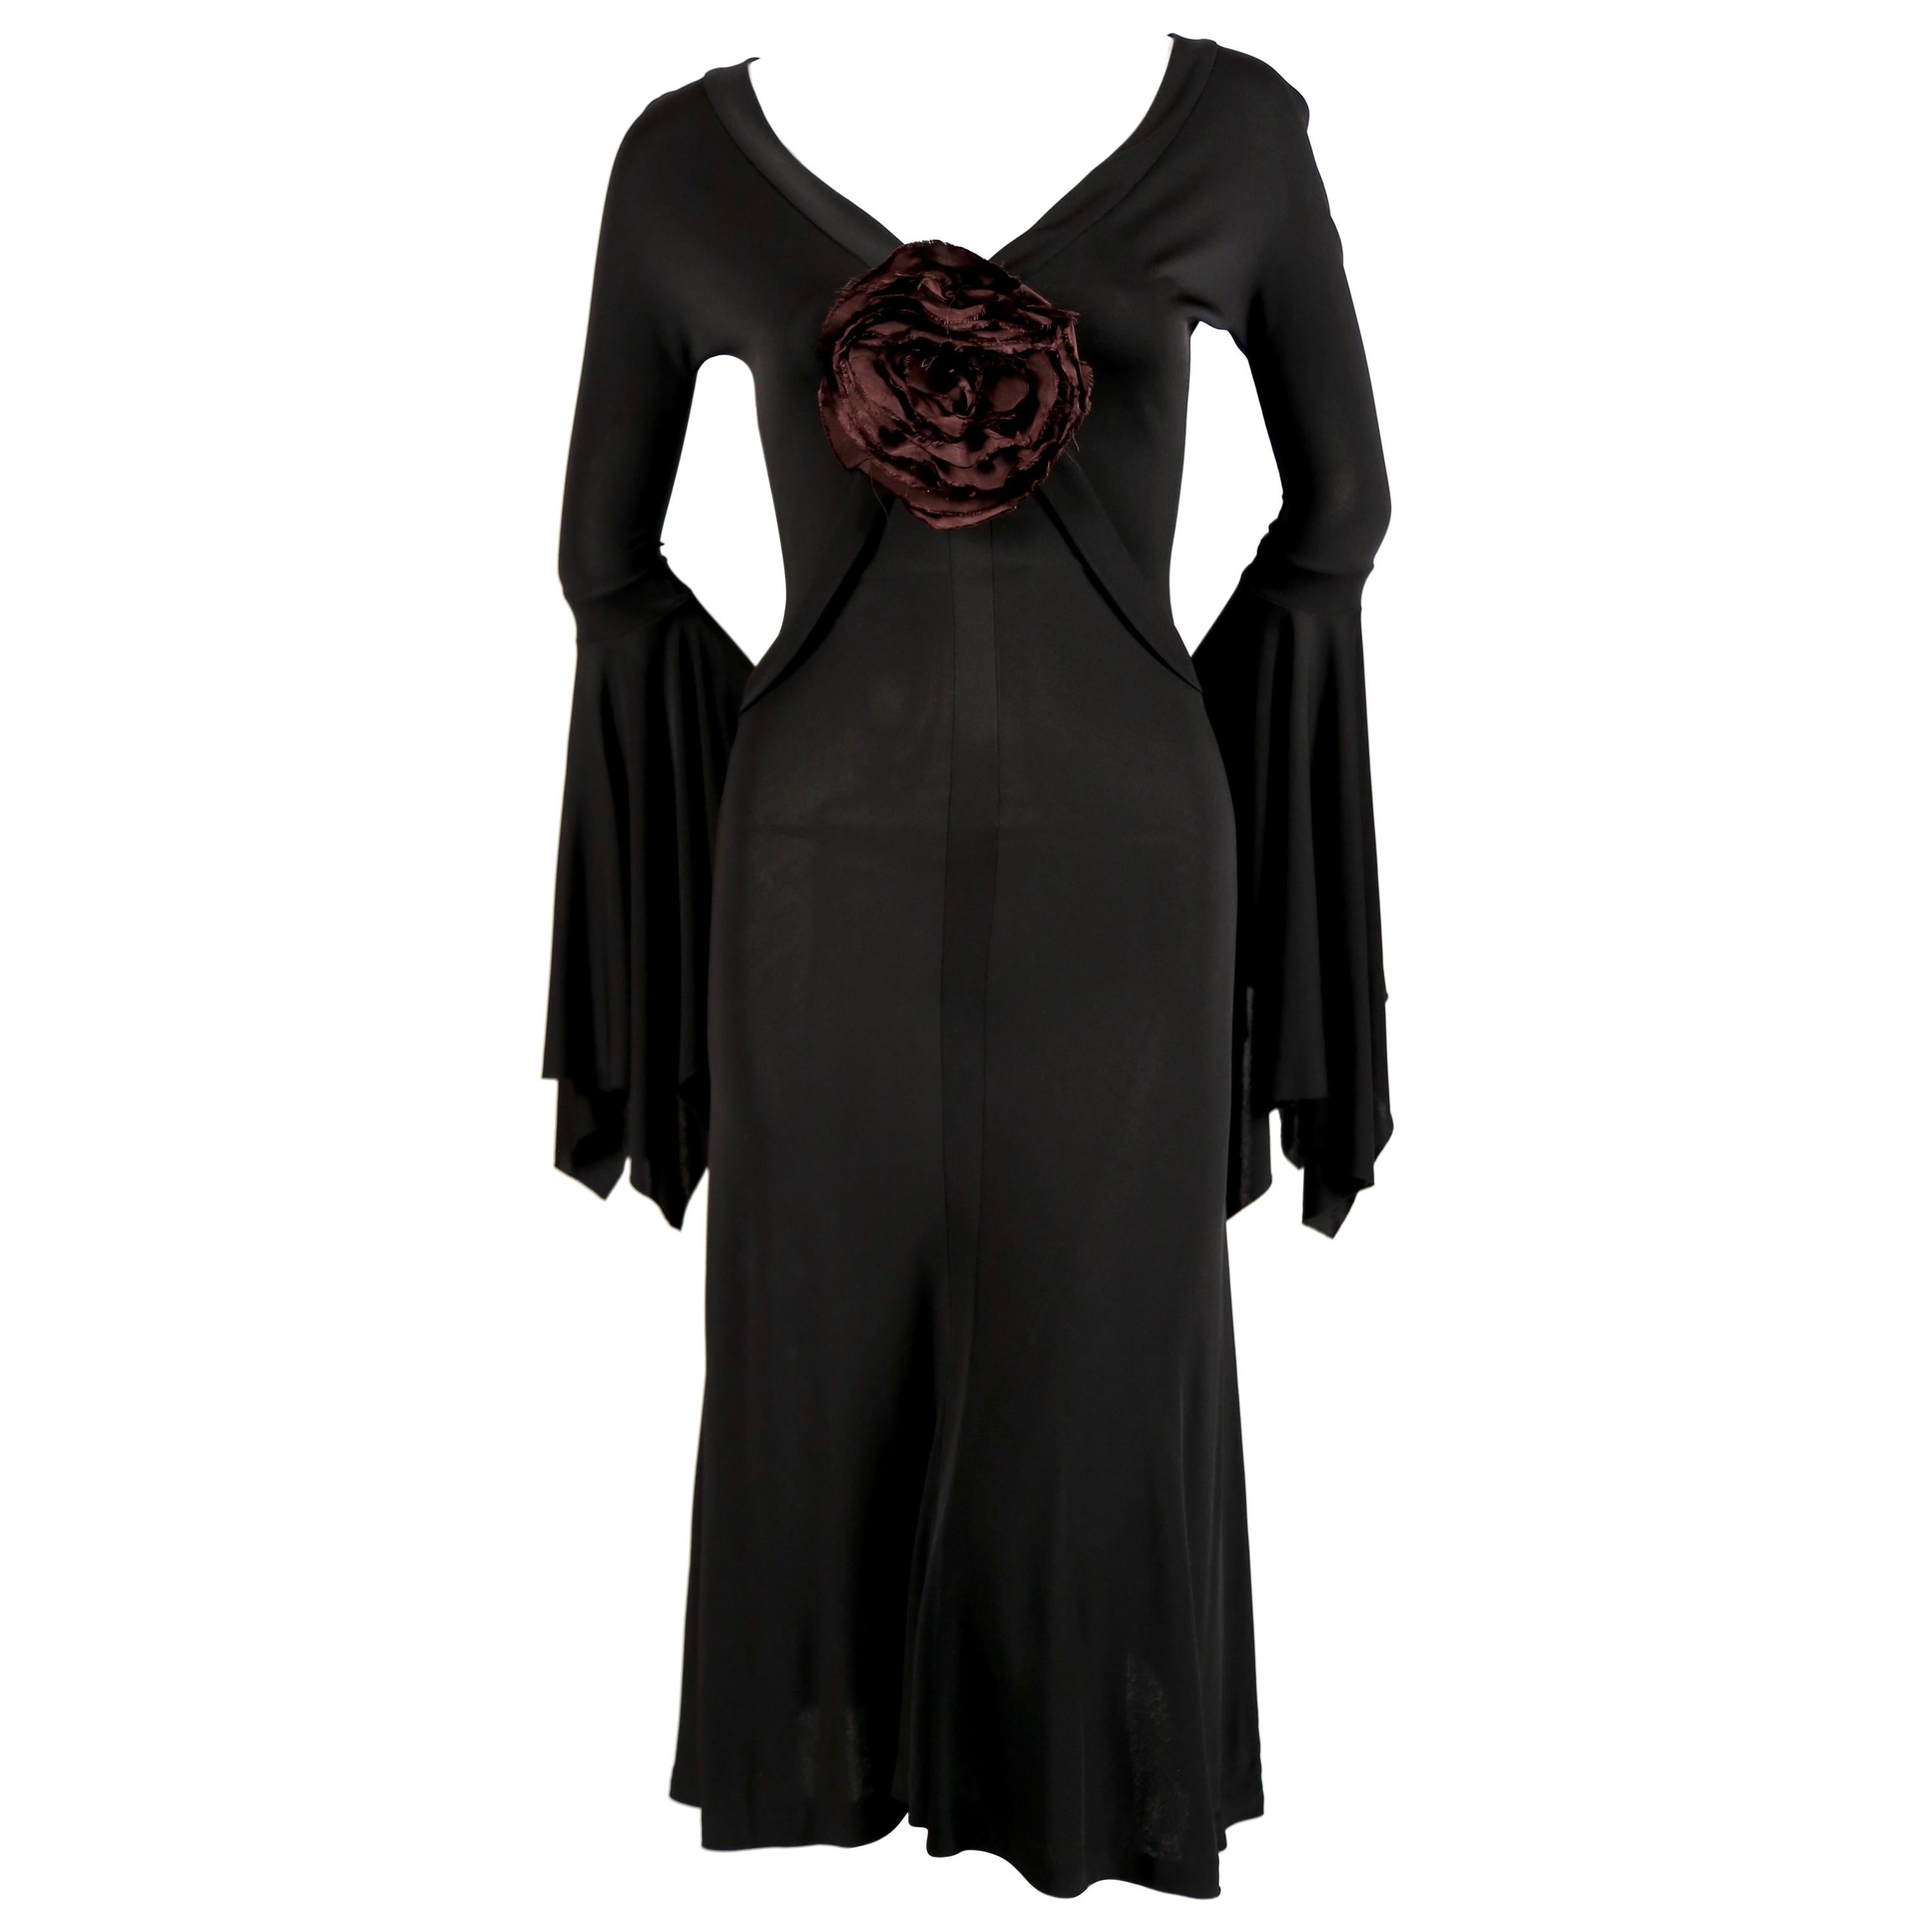 2003 TOM FORD for YVES SAINT LAURENT black runway dress with rose